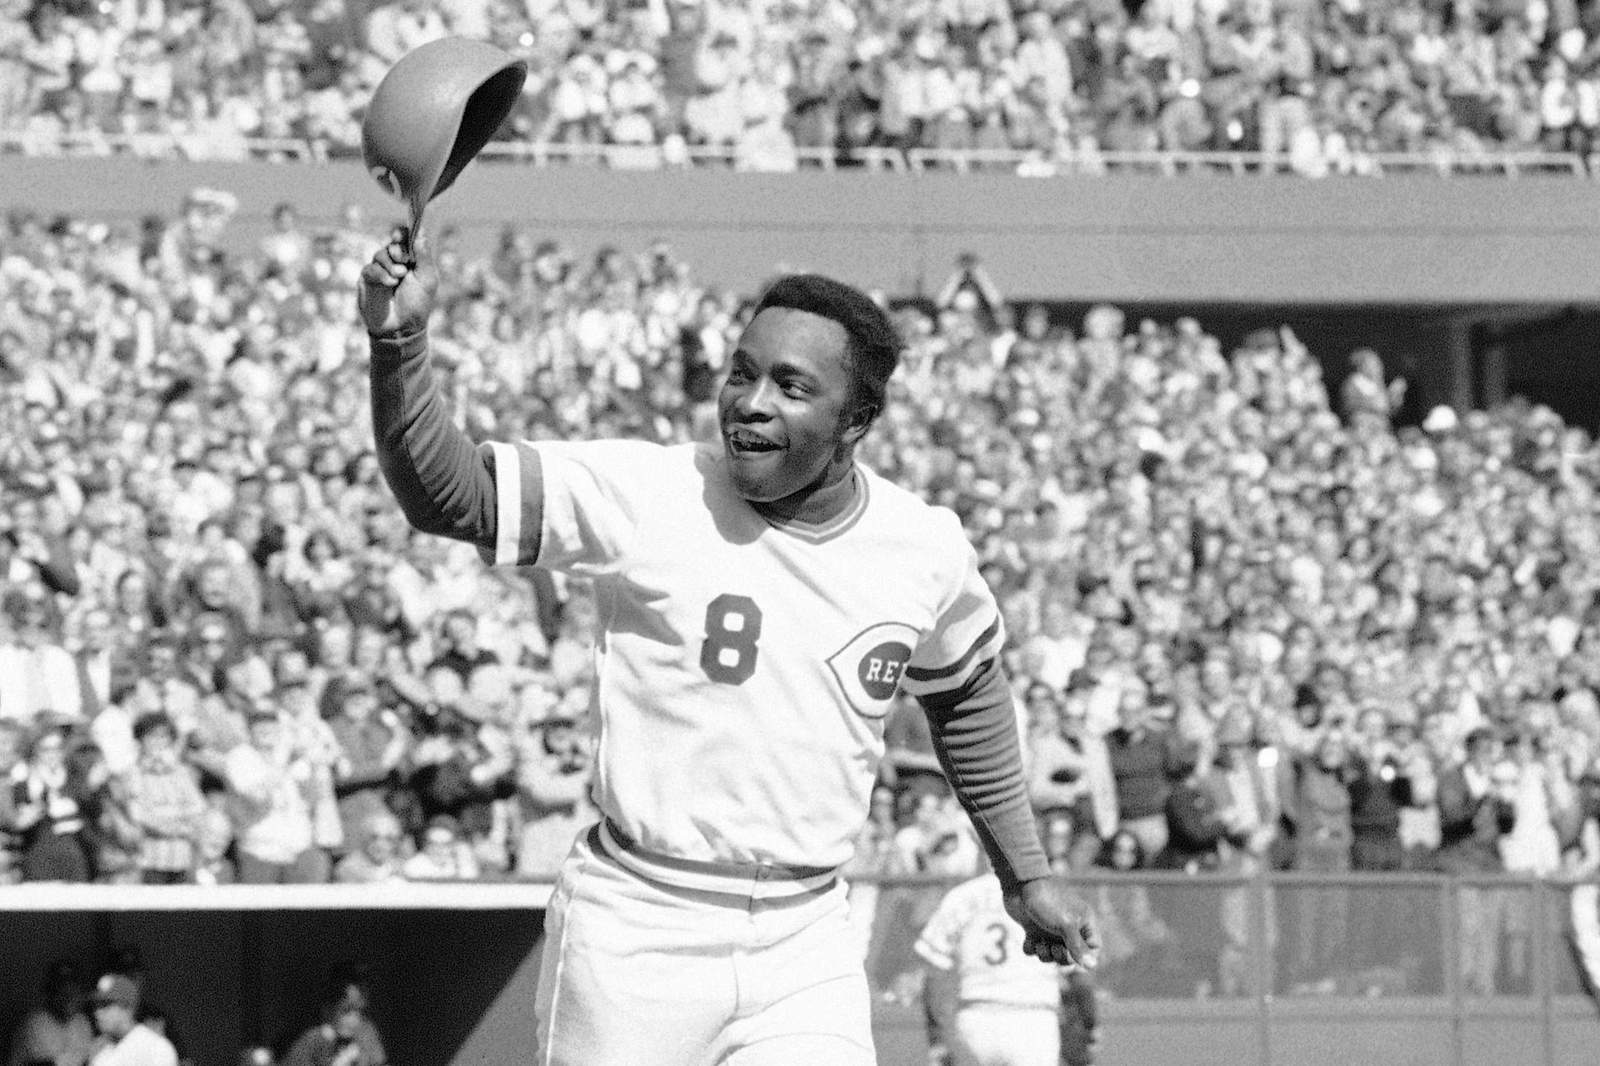 Baseball legend Joe Morgan’s legacy includes remarkable season in San Antonio